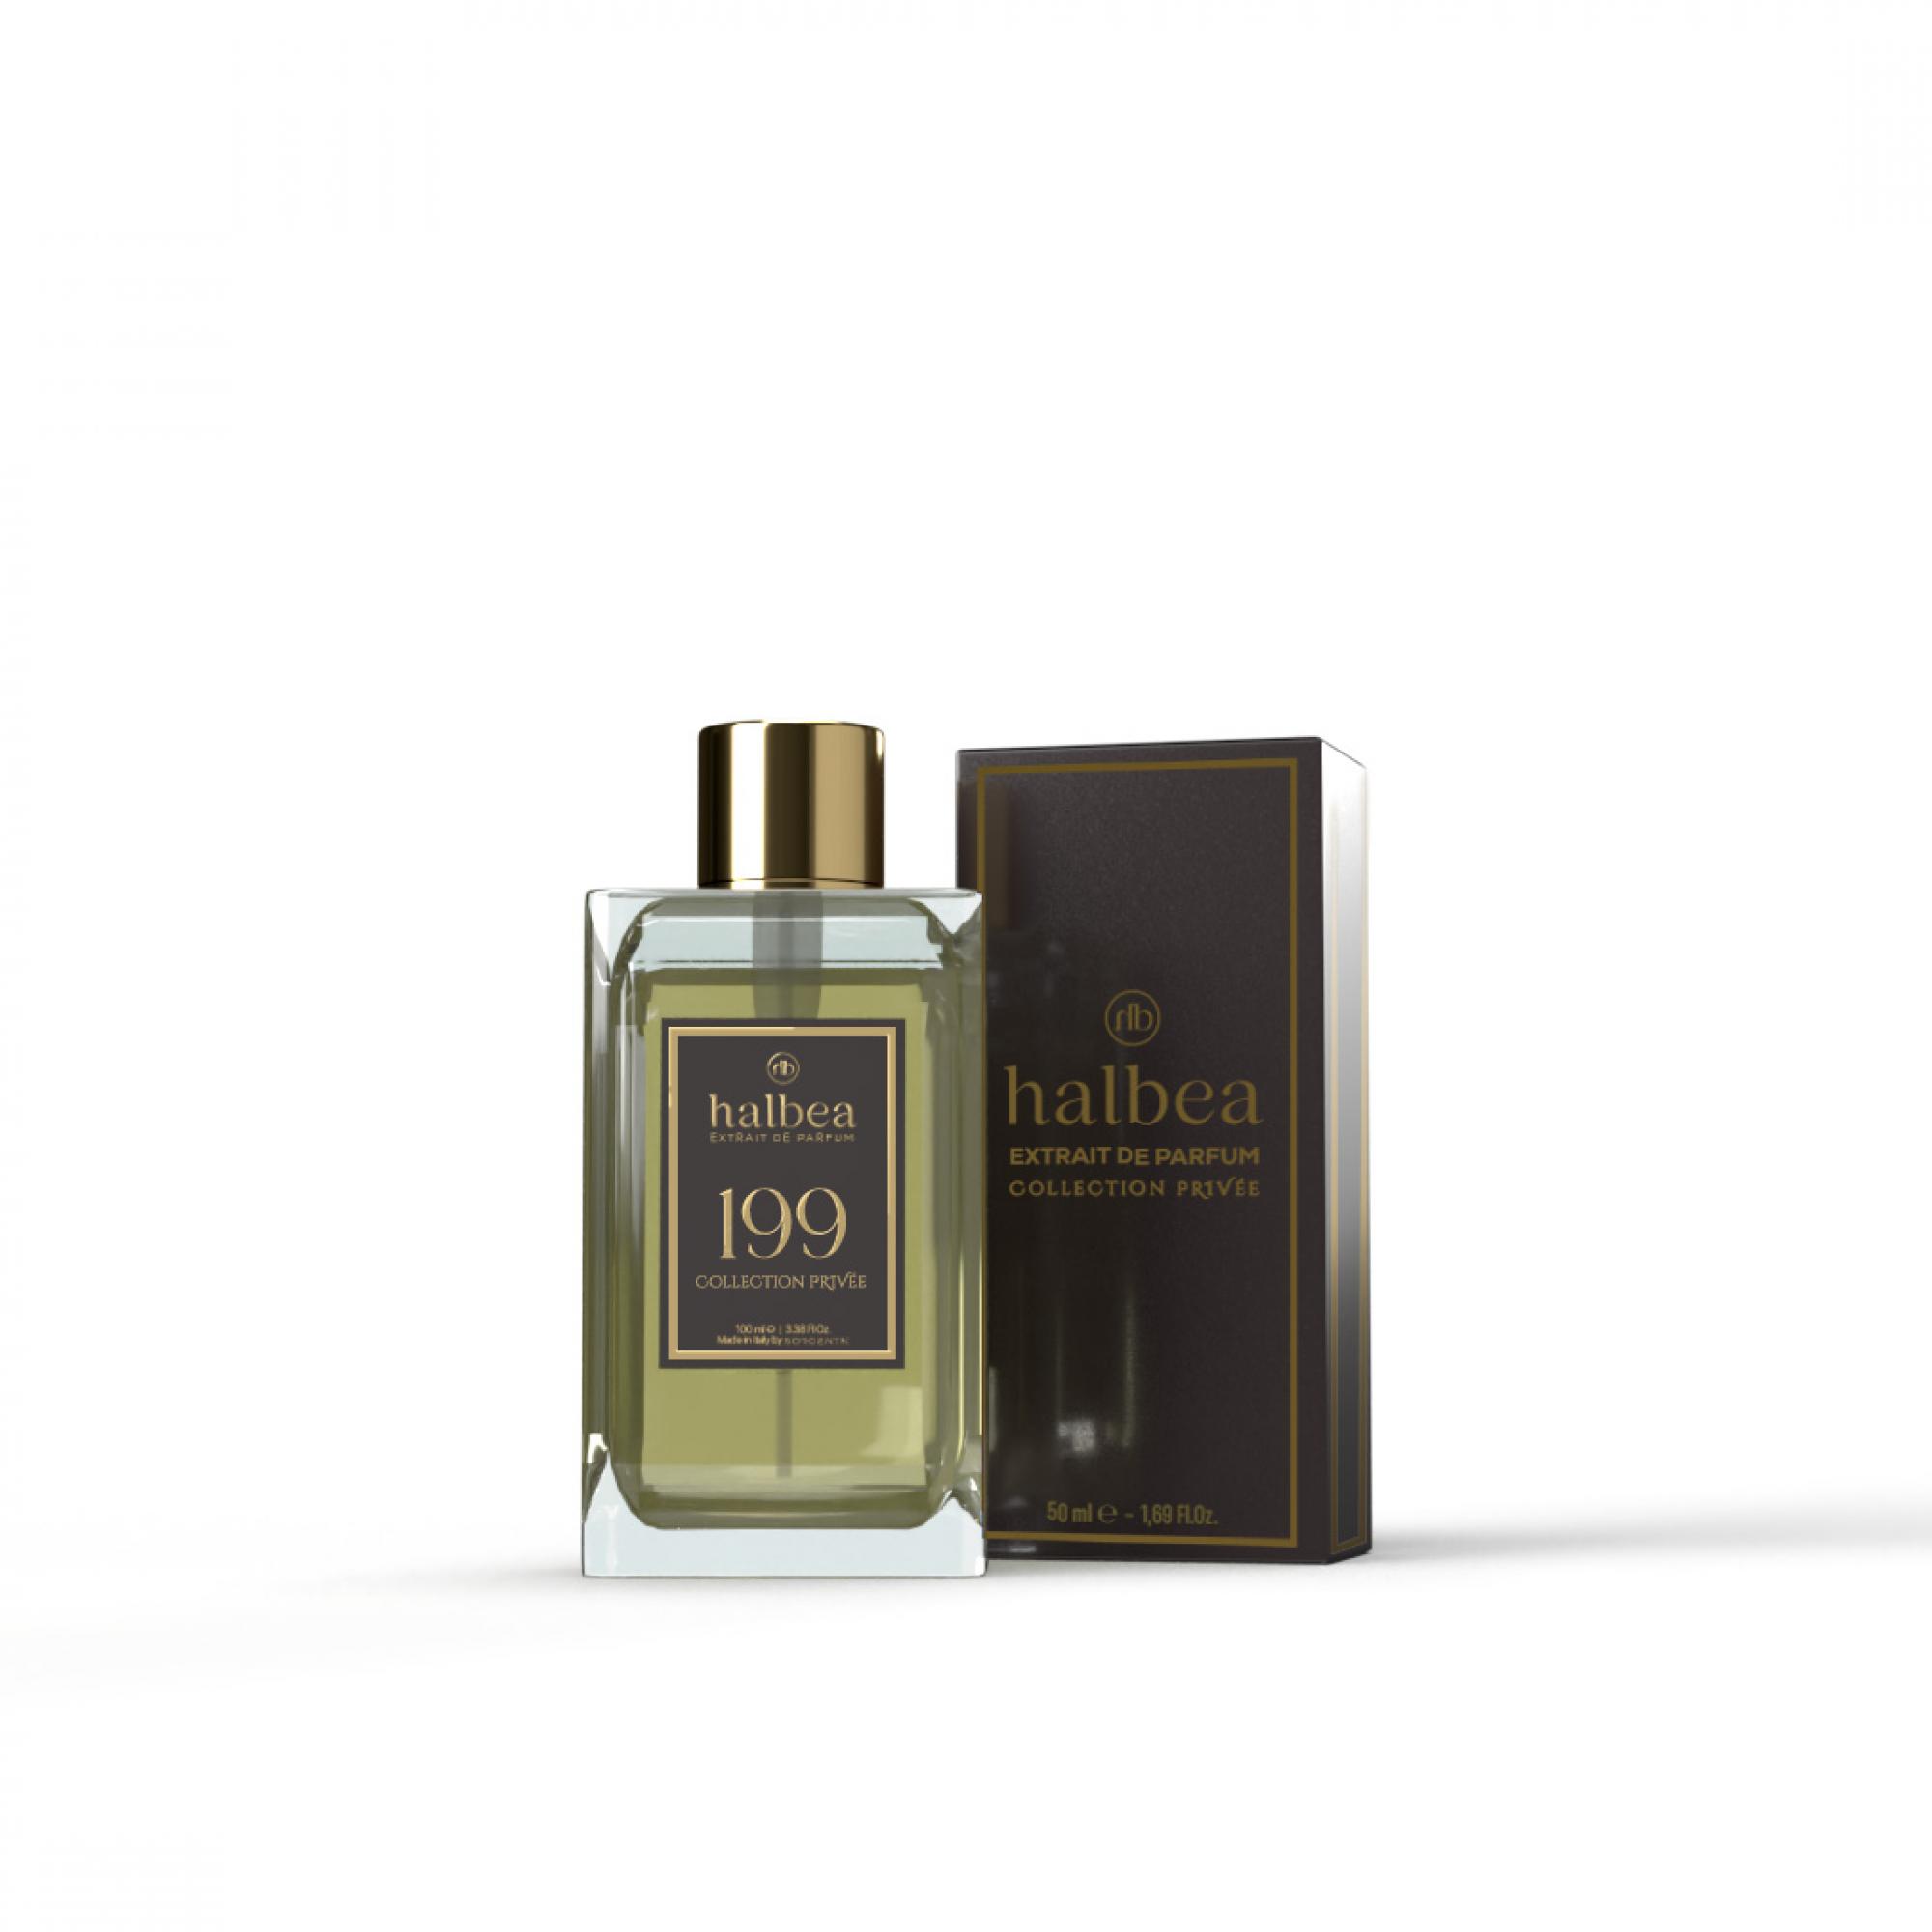 Halbea Parfum Nr. 199 insp. by Narcotic Venus Nasomatto 50ml